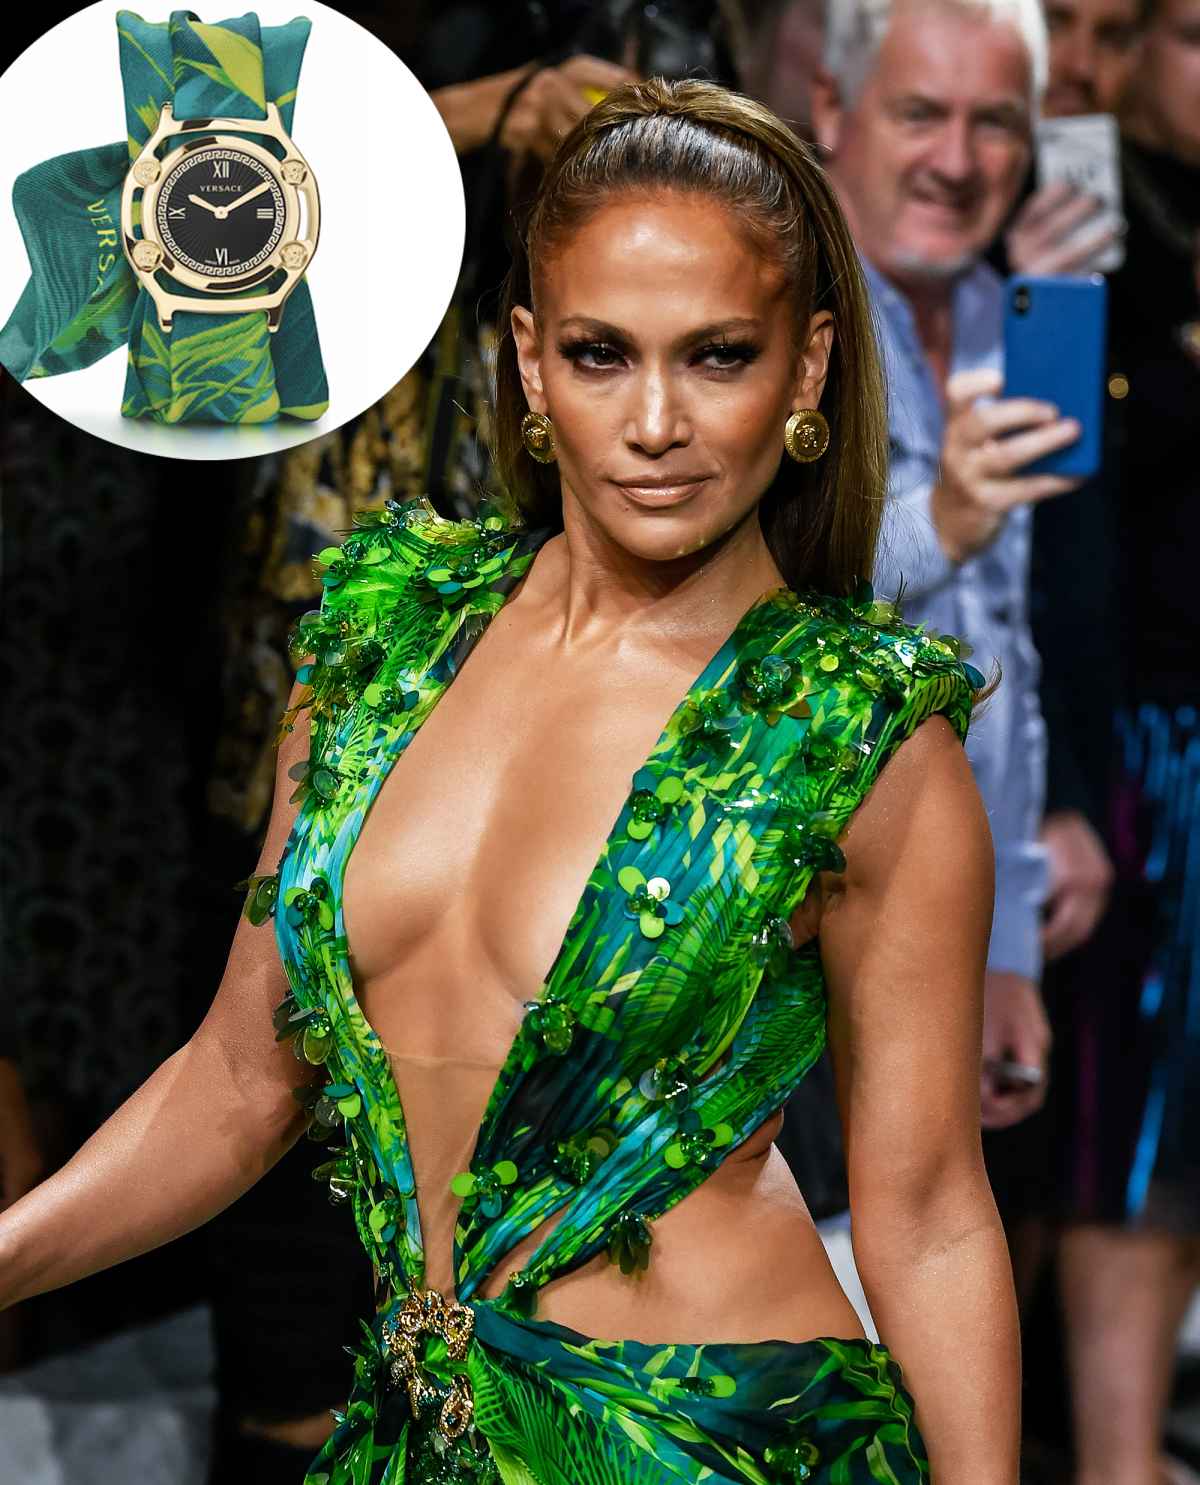 Image of Jennifer Lopez (wearing a Louis Vuitton dress) at